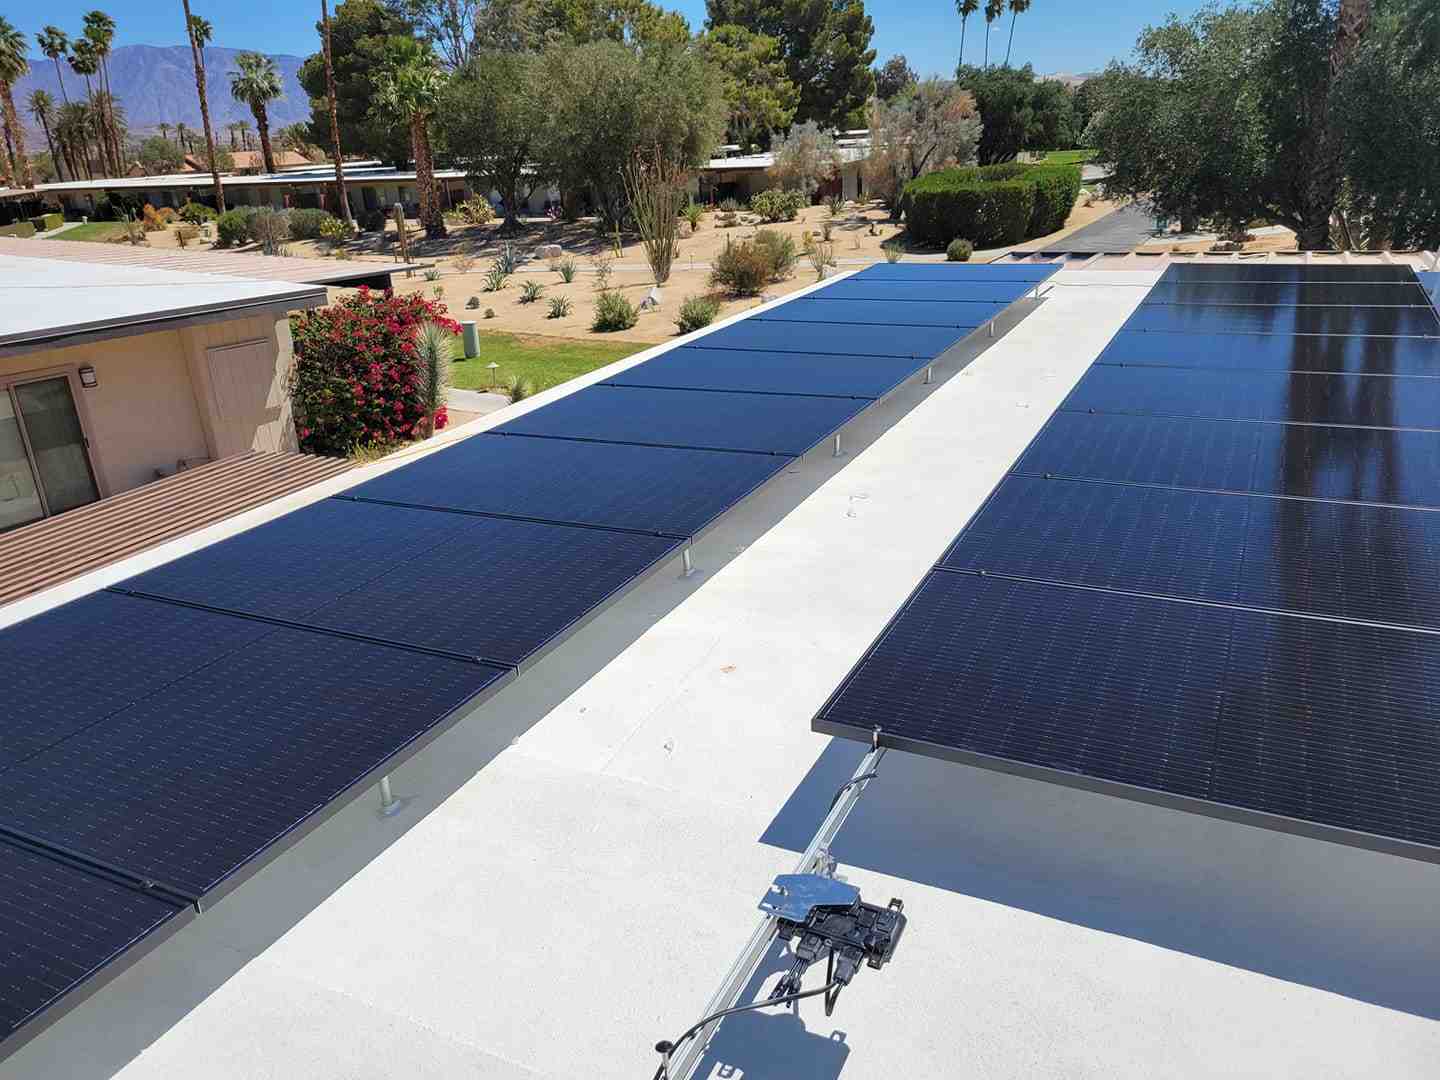 Should I put solar panels on my new roof?